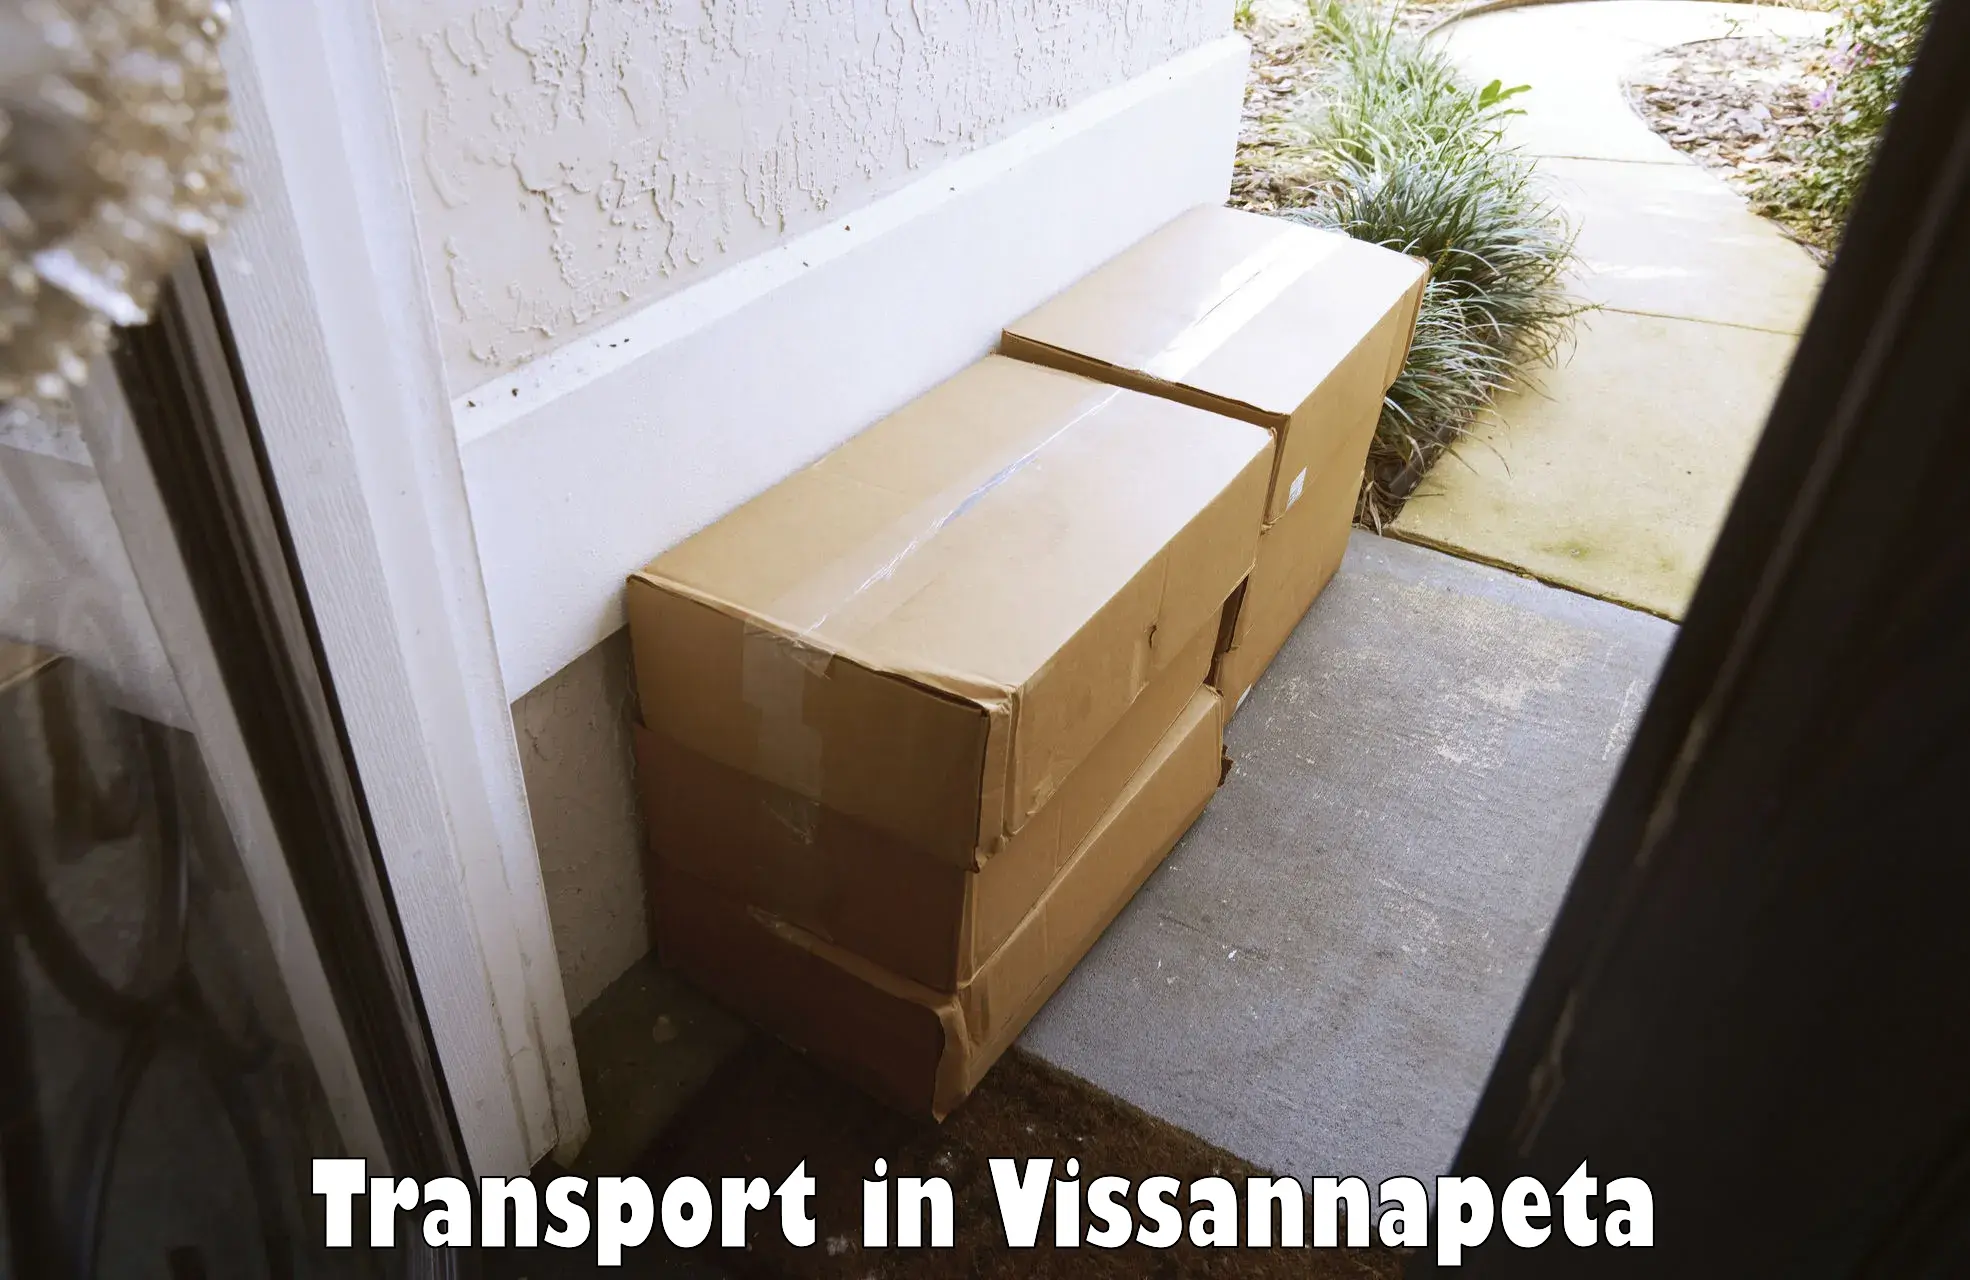 Sending bike to another city in Vissannapeta